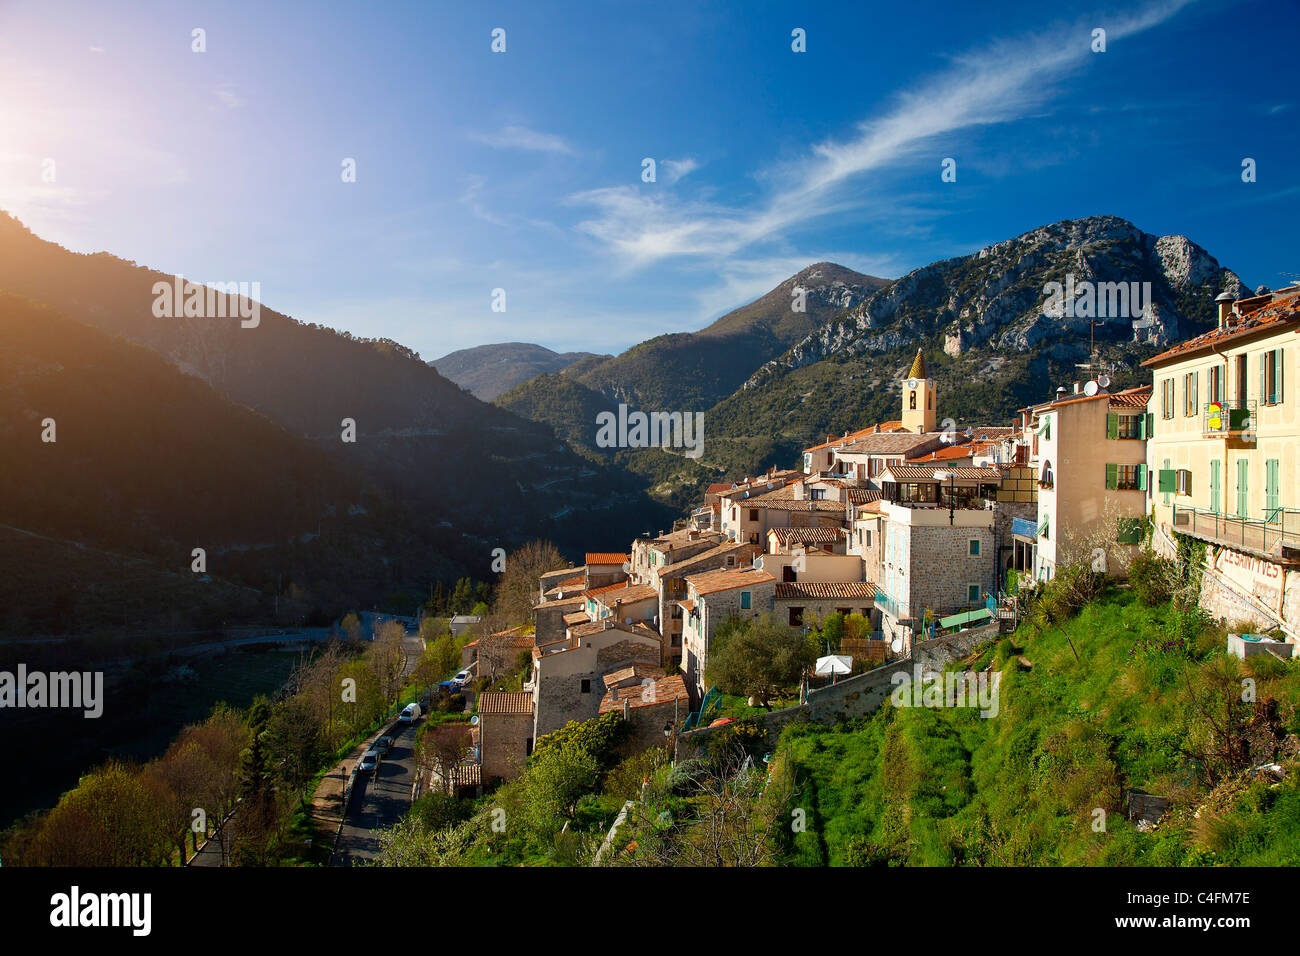 St. Agnes Dorf gekennzeichnet Les Plus Beaux Dörfer de France (The Most schöne Dörfer von Frankreich) Stockfoto